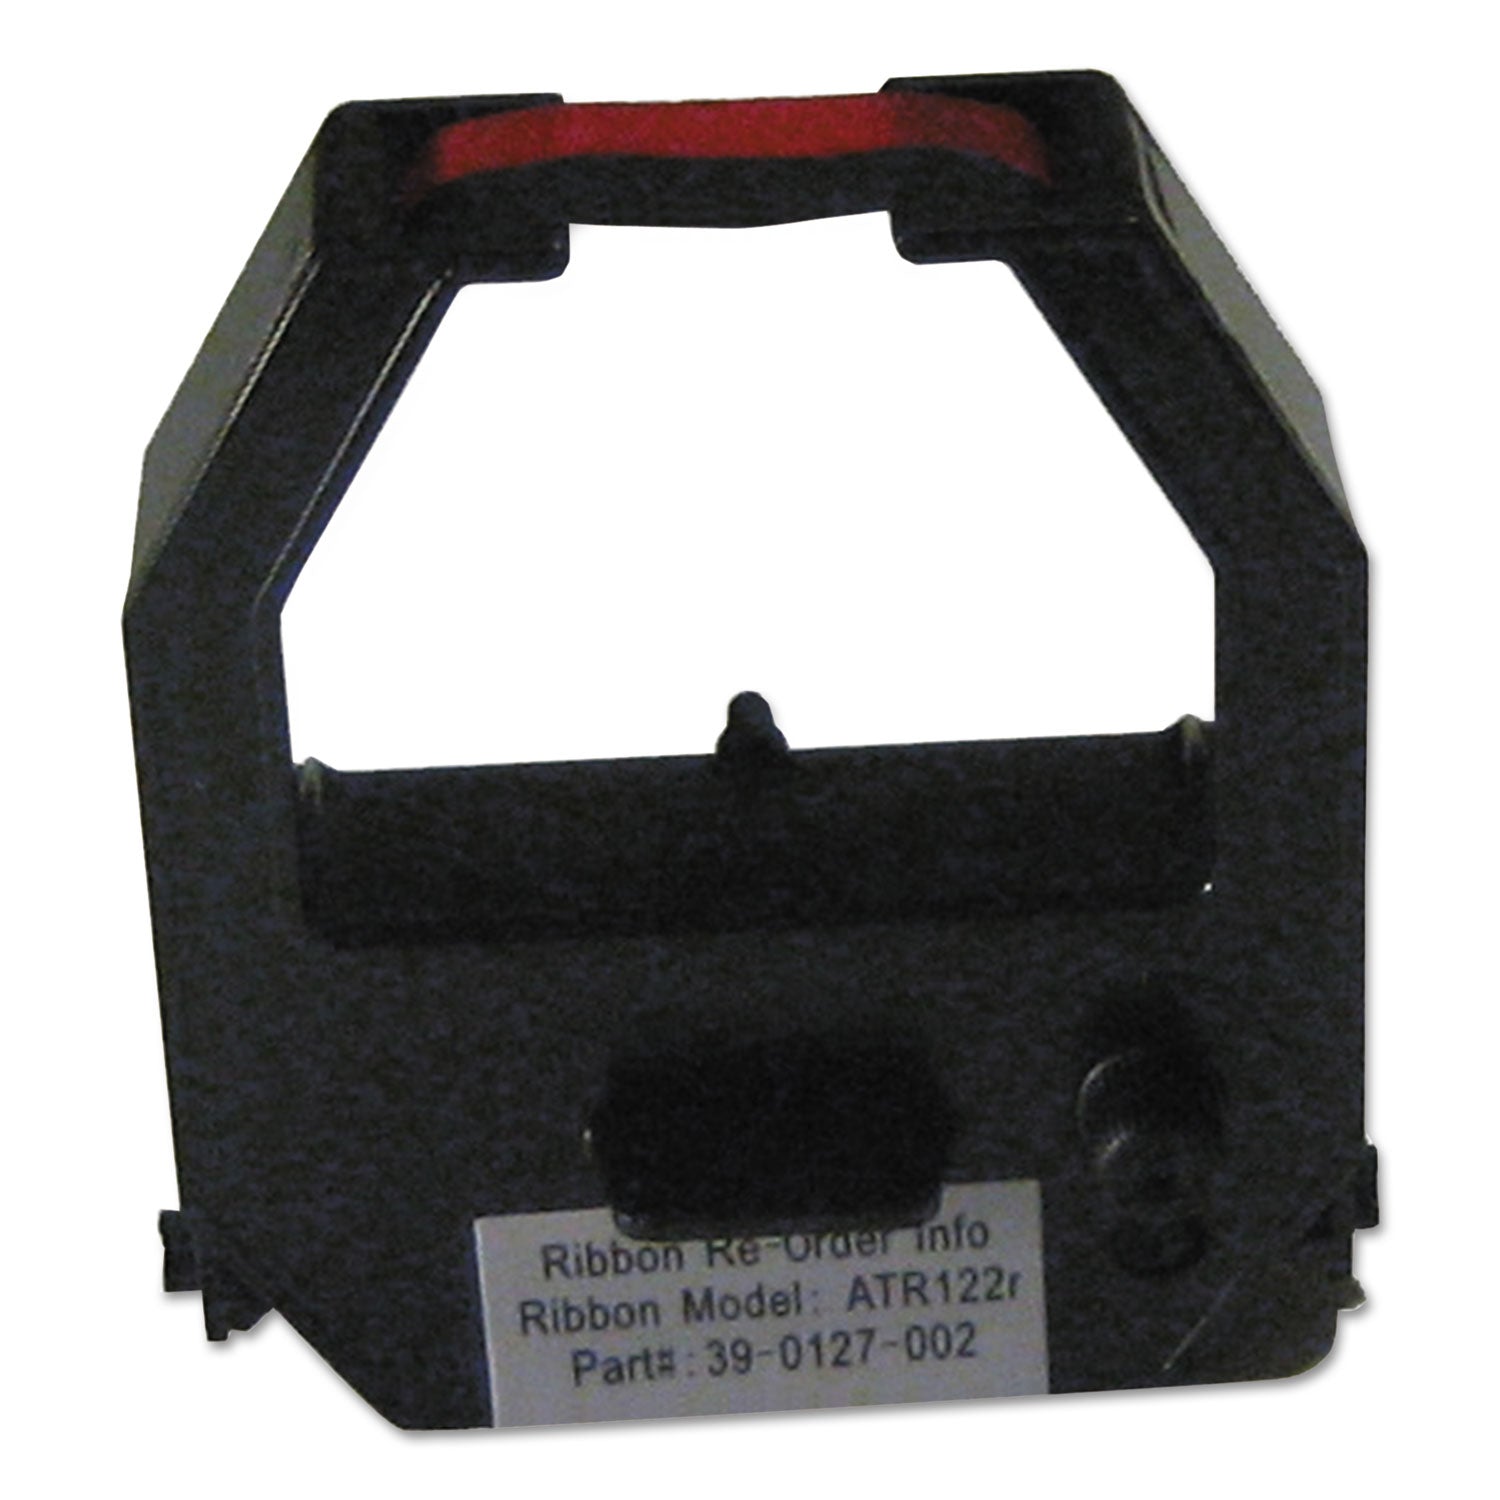 390127002 Ribbon Cartridge for Model ATR480 and ATR120r Electronic Time Clocks, Black/Red - 